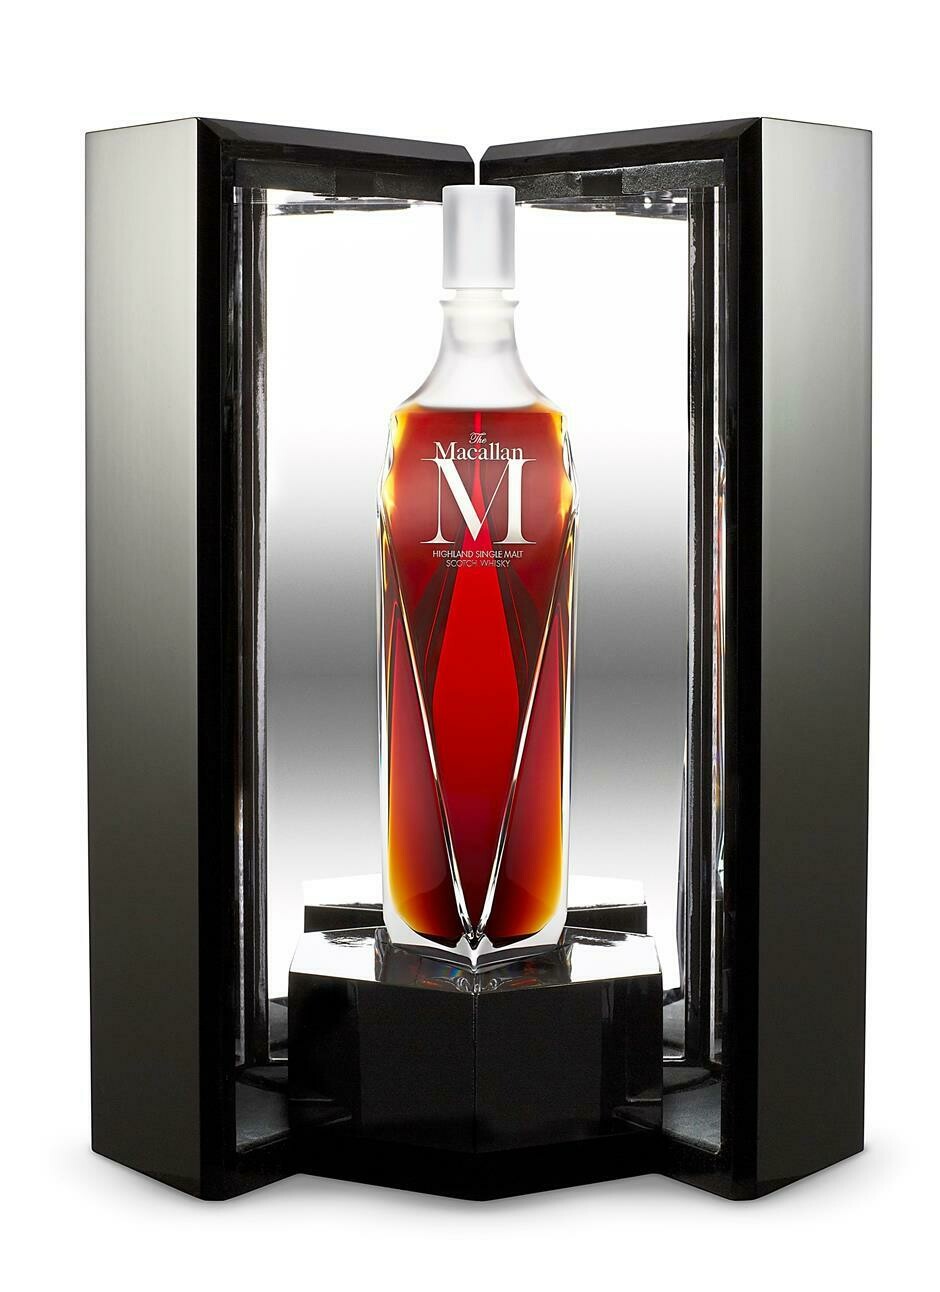 Macallan ‘M Decanter’ Single Malt Scotch Whisky